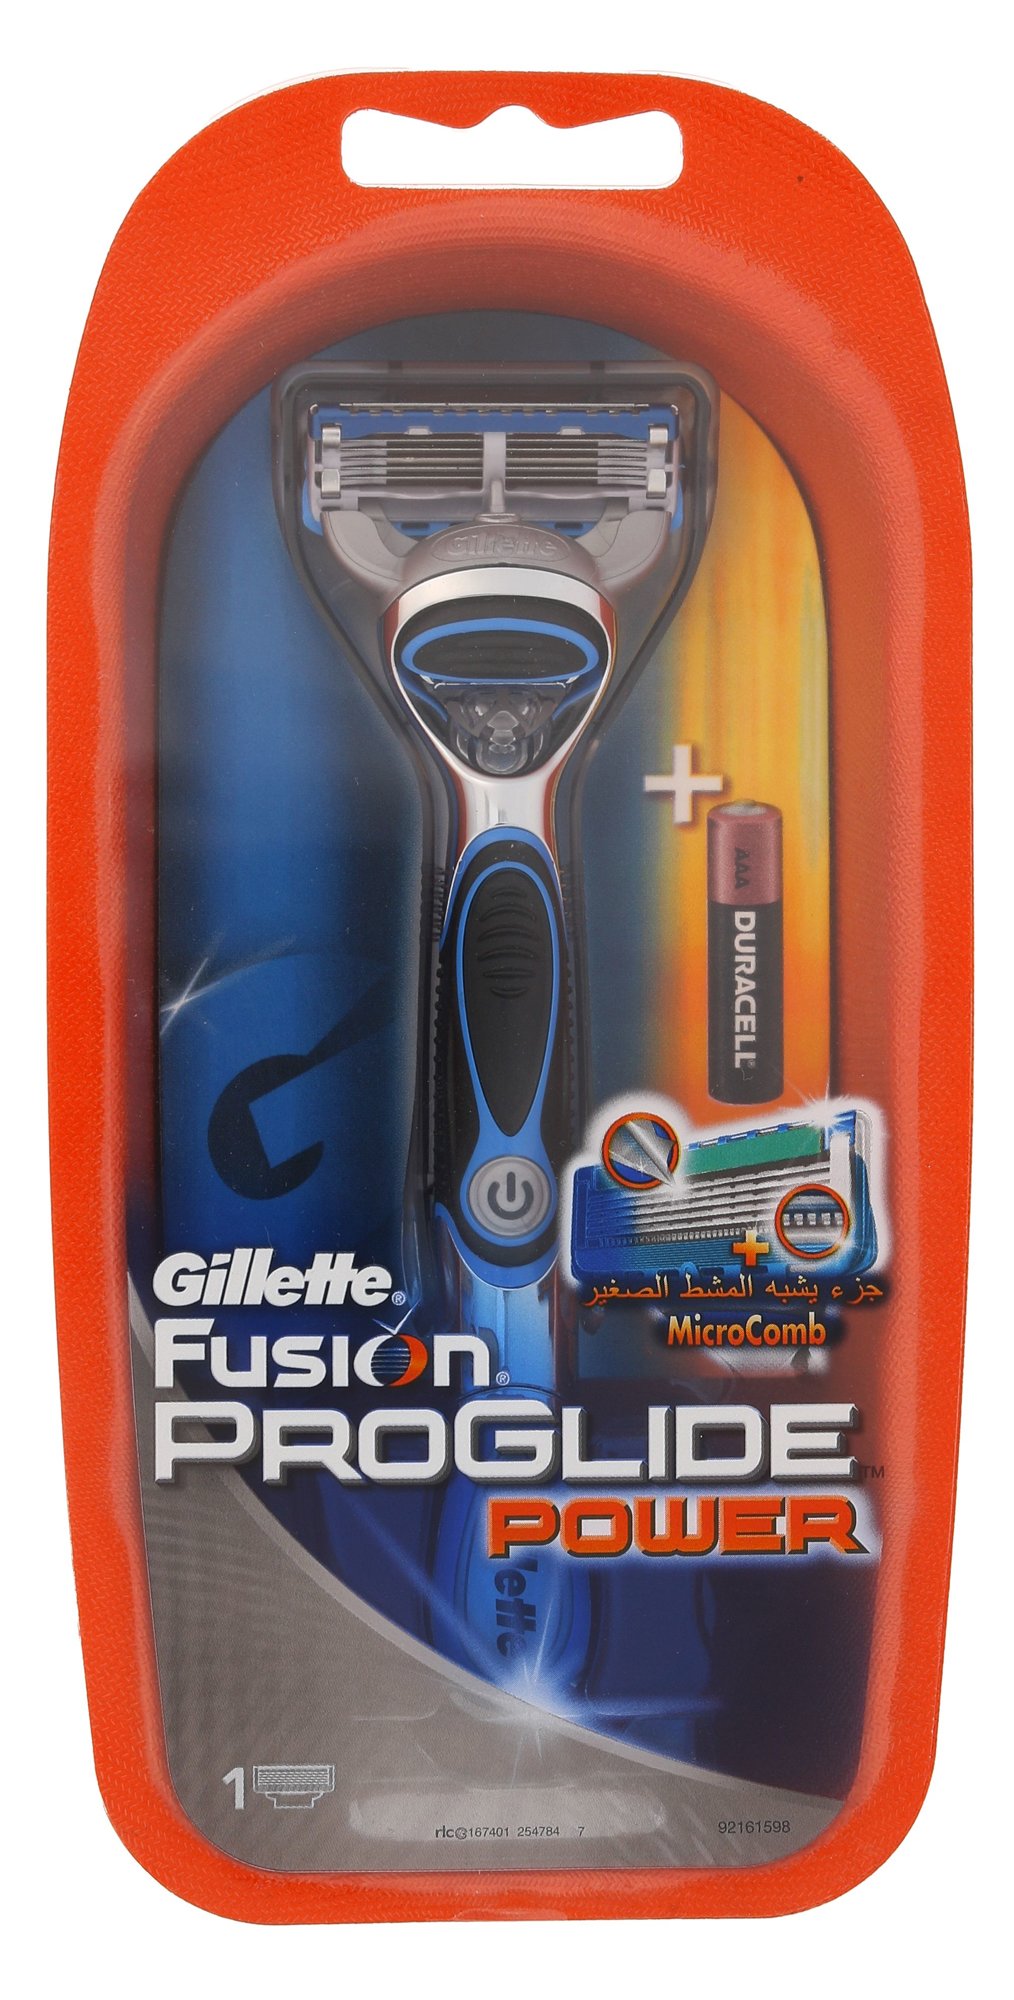 Gillette Fusion Proglide Power skustuvas